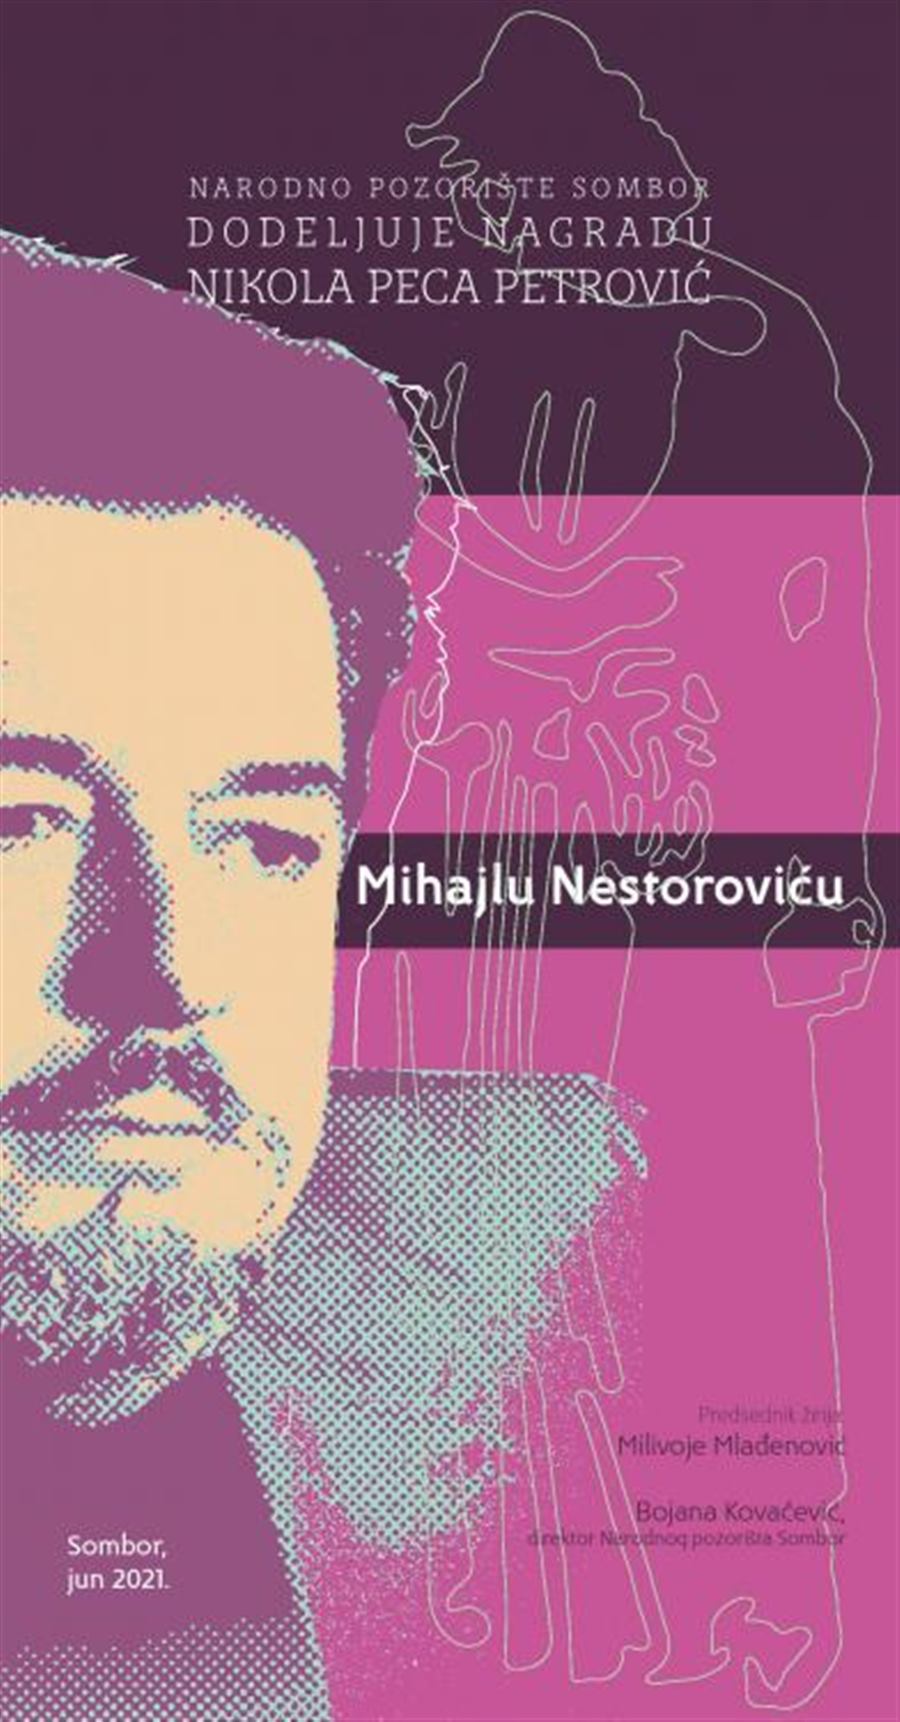 Mihajlu Nestoroviću dodeljena nagrada „Nikola Peca Petrović”